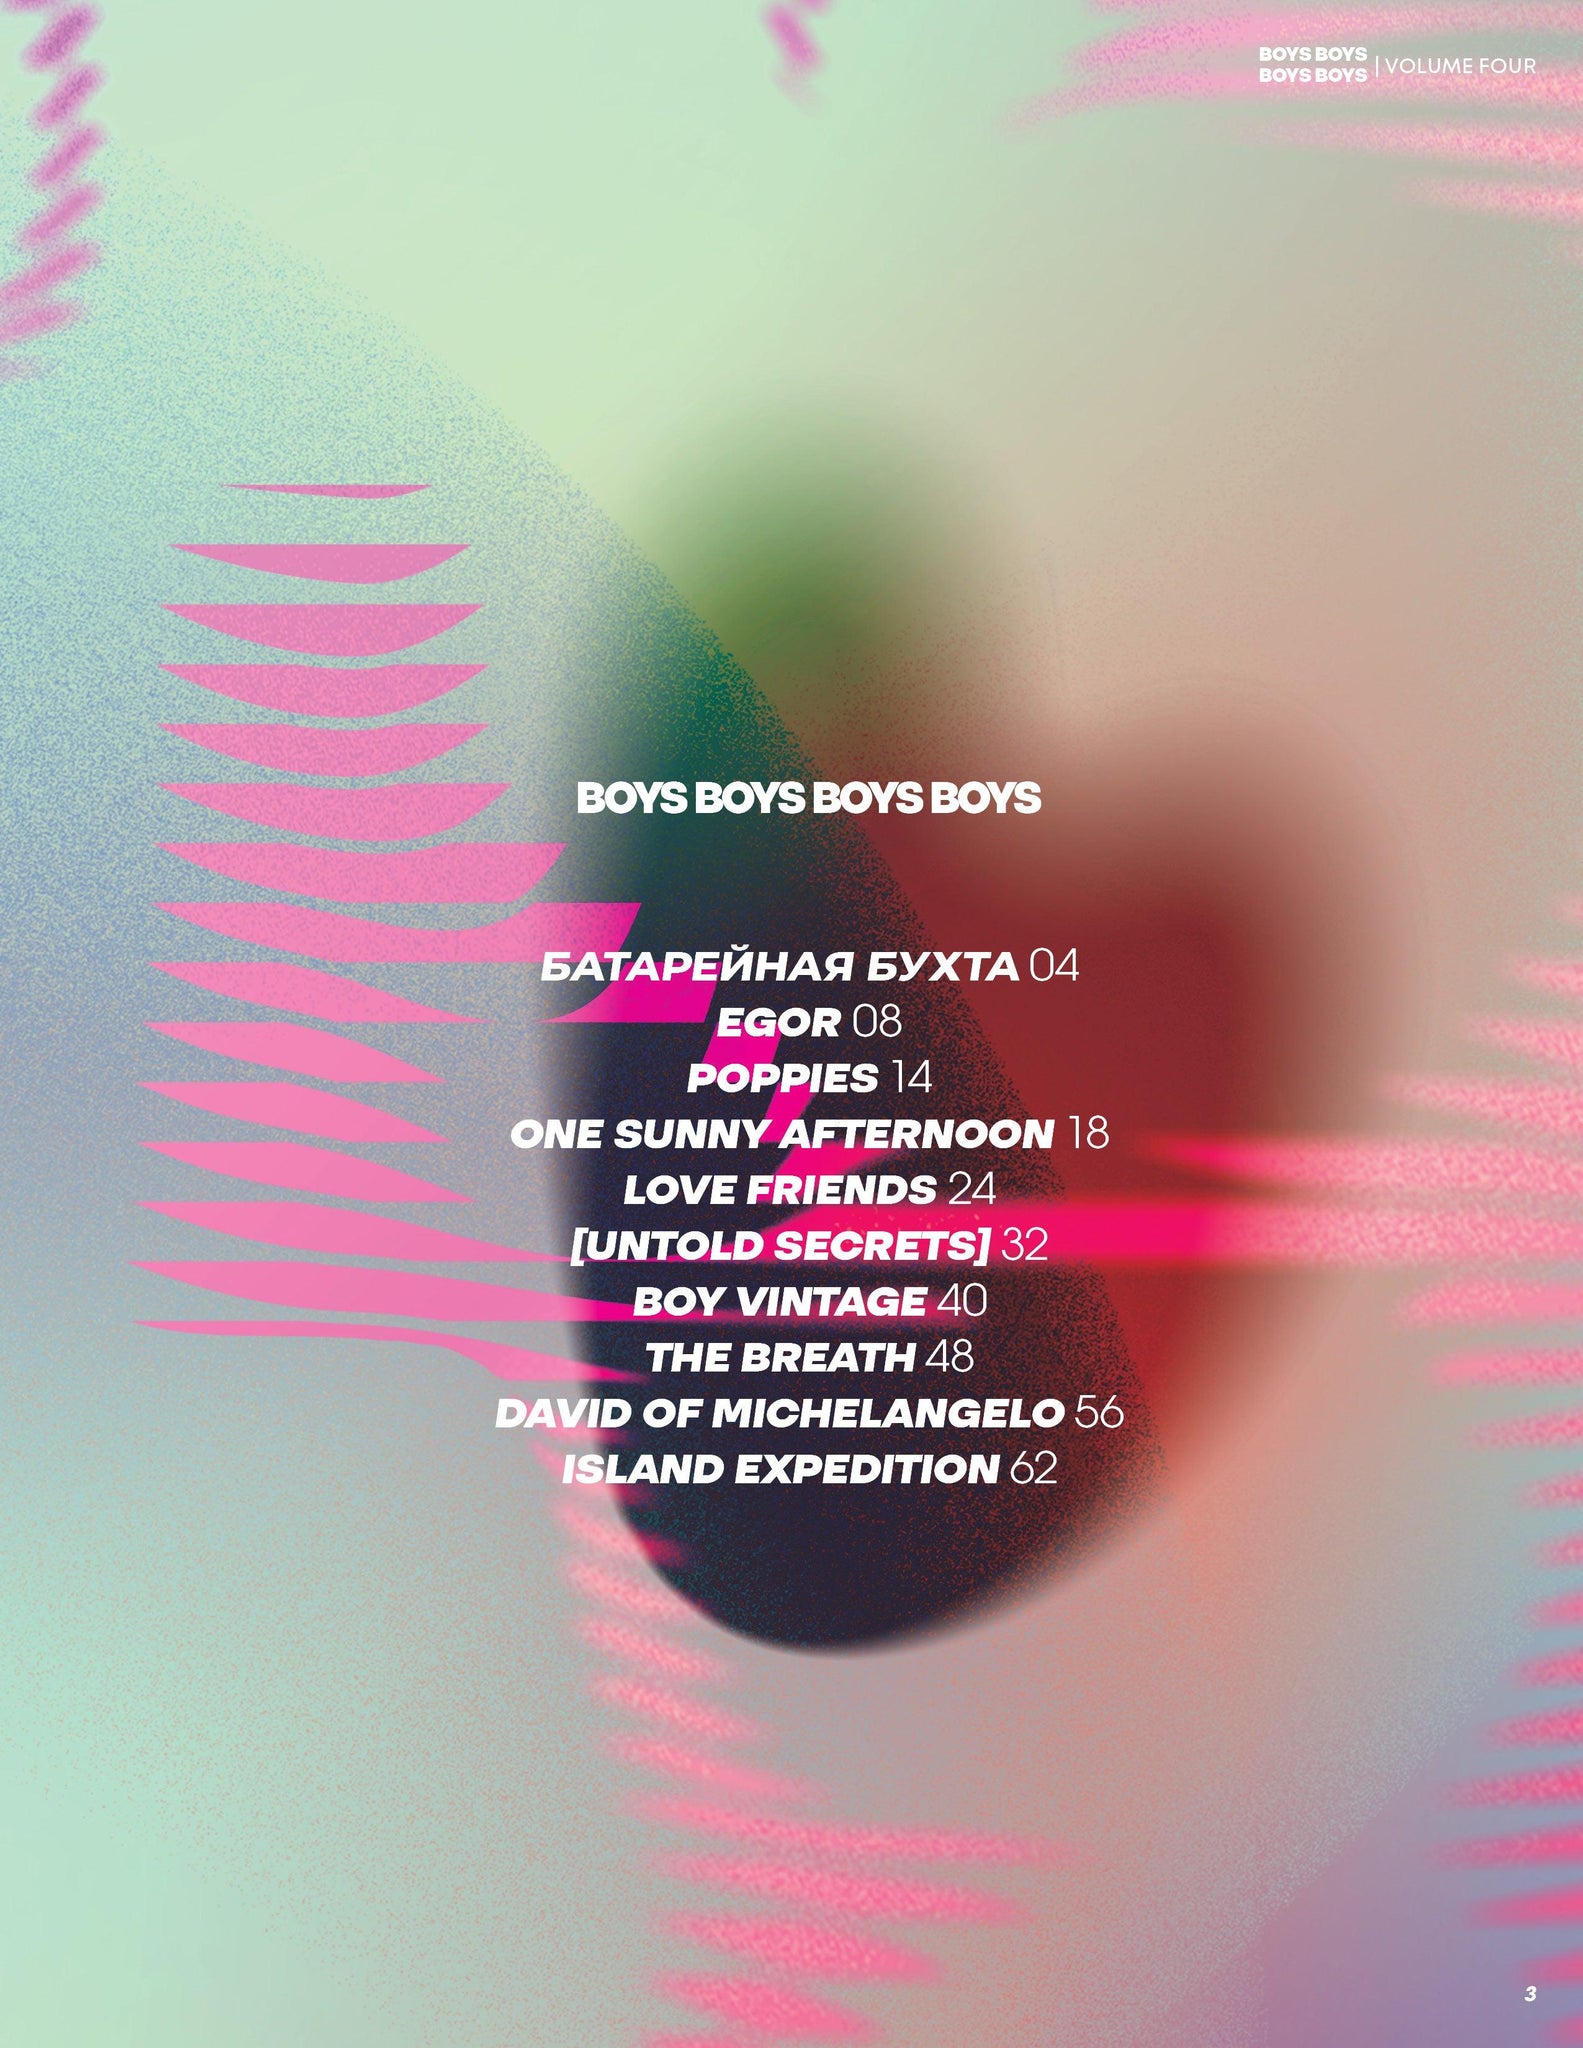 BOYS BOYS BOYS BOYS | VOLUME FOUR | ISSUE #05 - Mob Journal